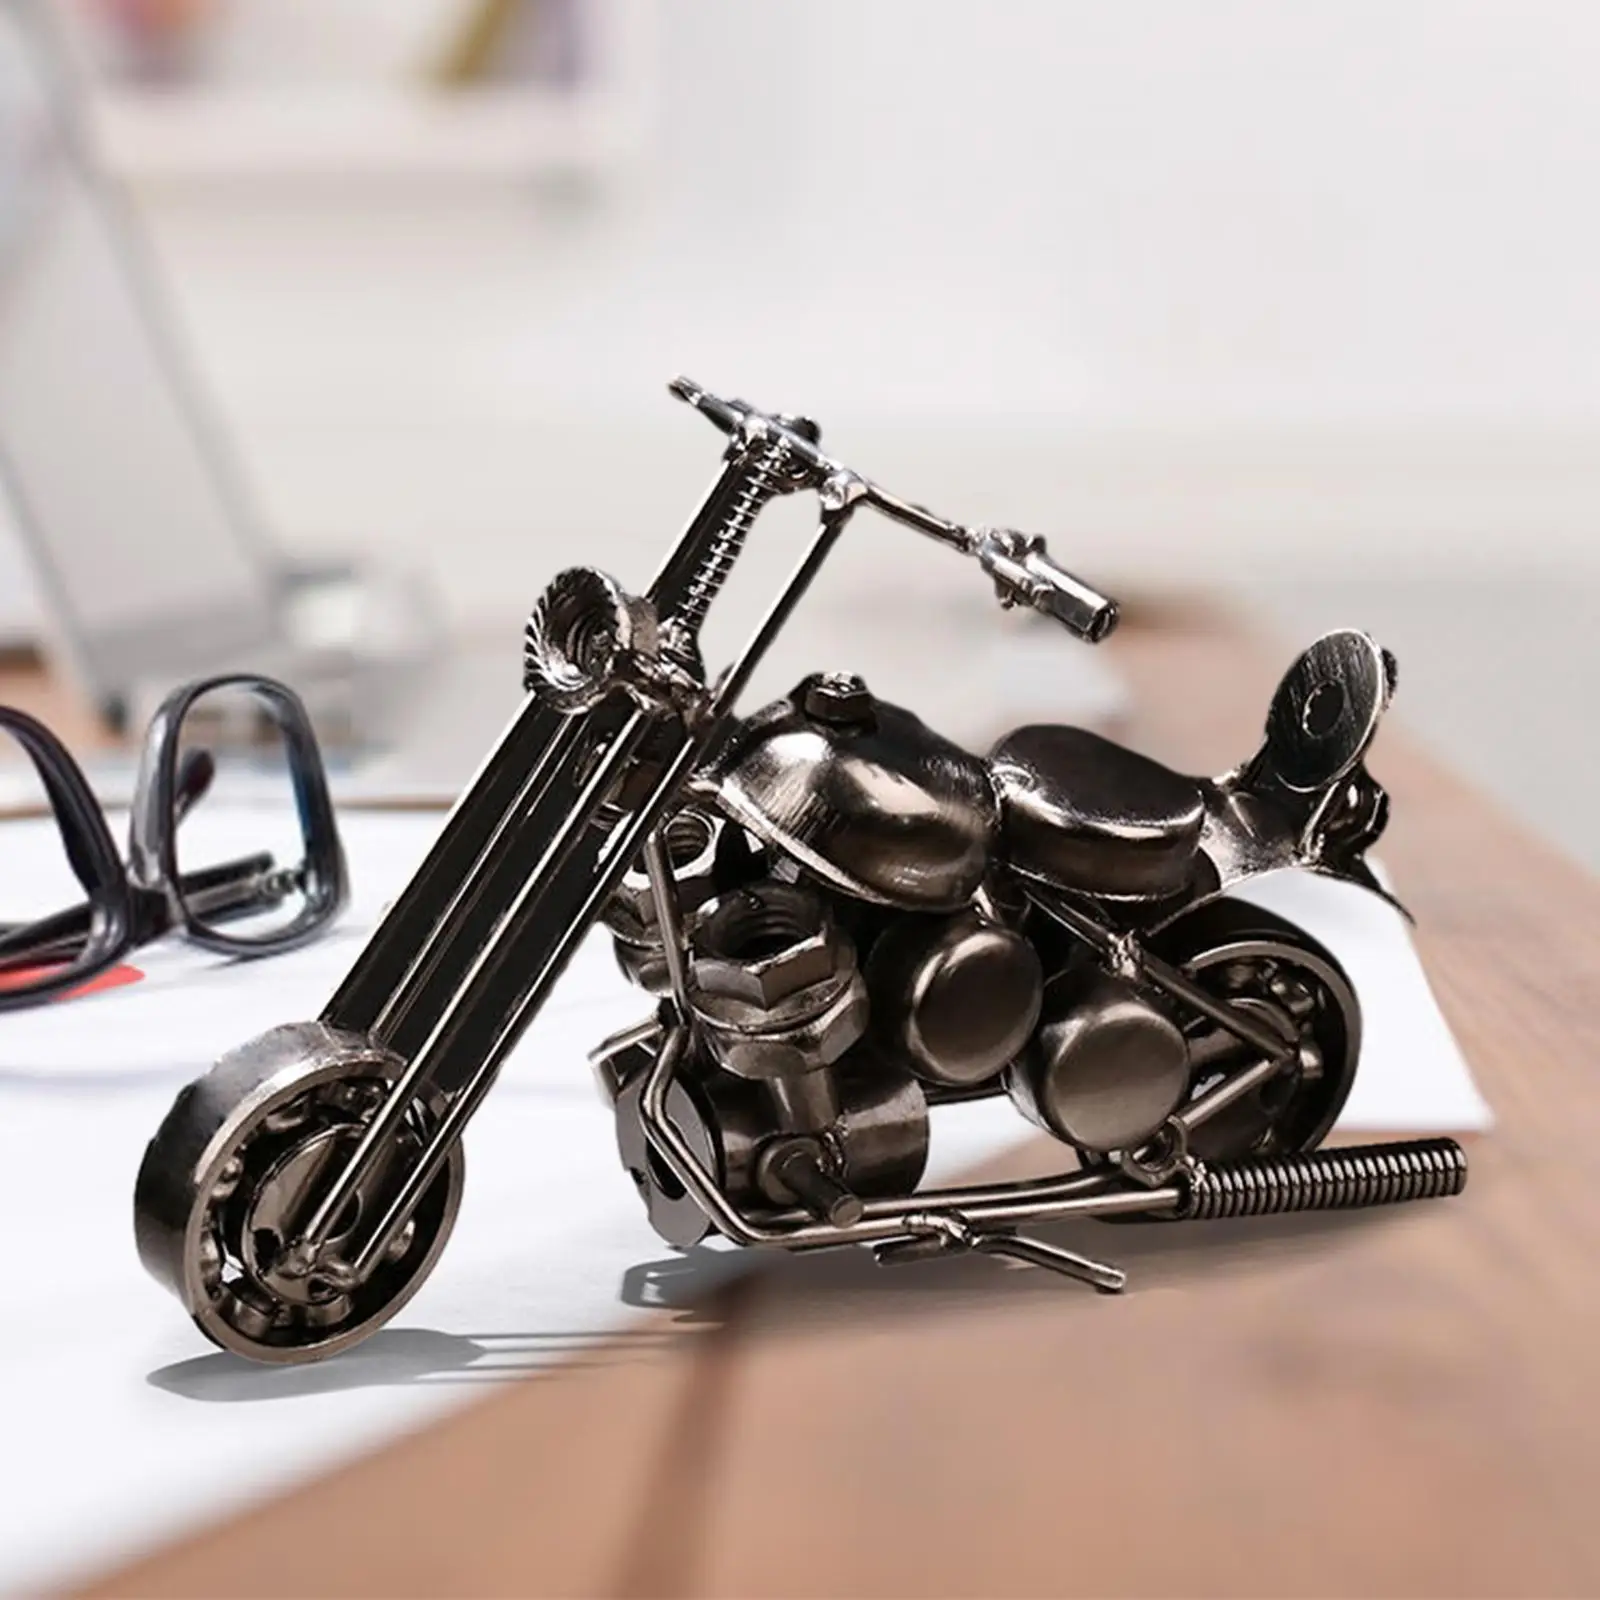 Motorcycle Model Motorcycle Sculpture Iron Creative Decoration Figure Collectible Ornament for Home Bookshelf Desktop Kids